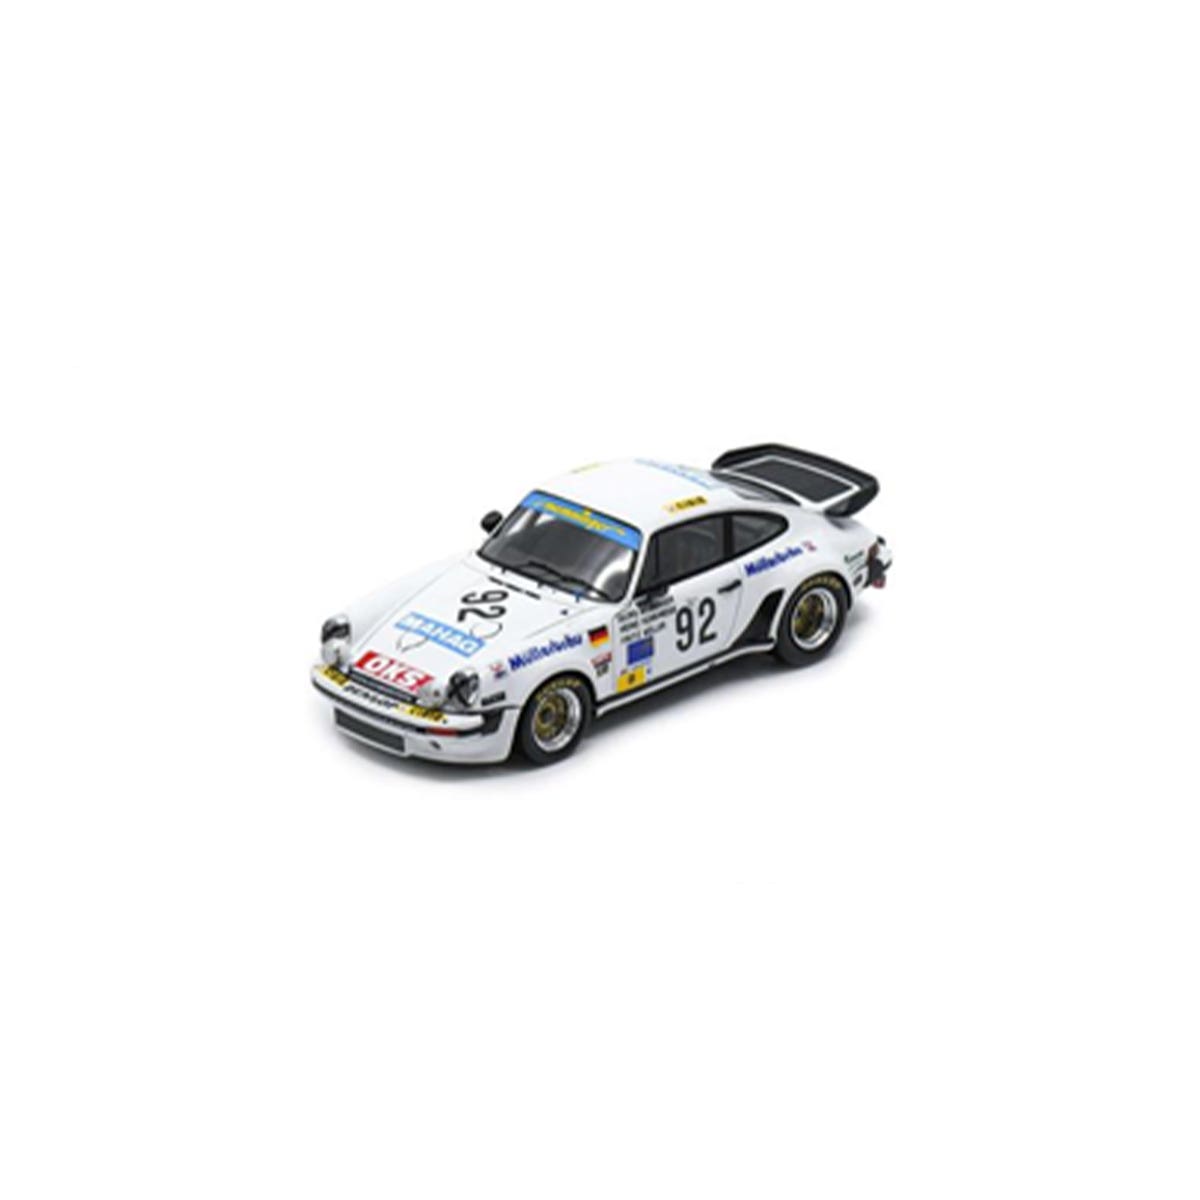 Porsche 930 No.92 13th 24H Le Mans 1983 - G. Memminger - F. Müller - H. Kuhn-Weiss - 1:43 Scale Resin Model Car